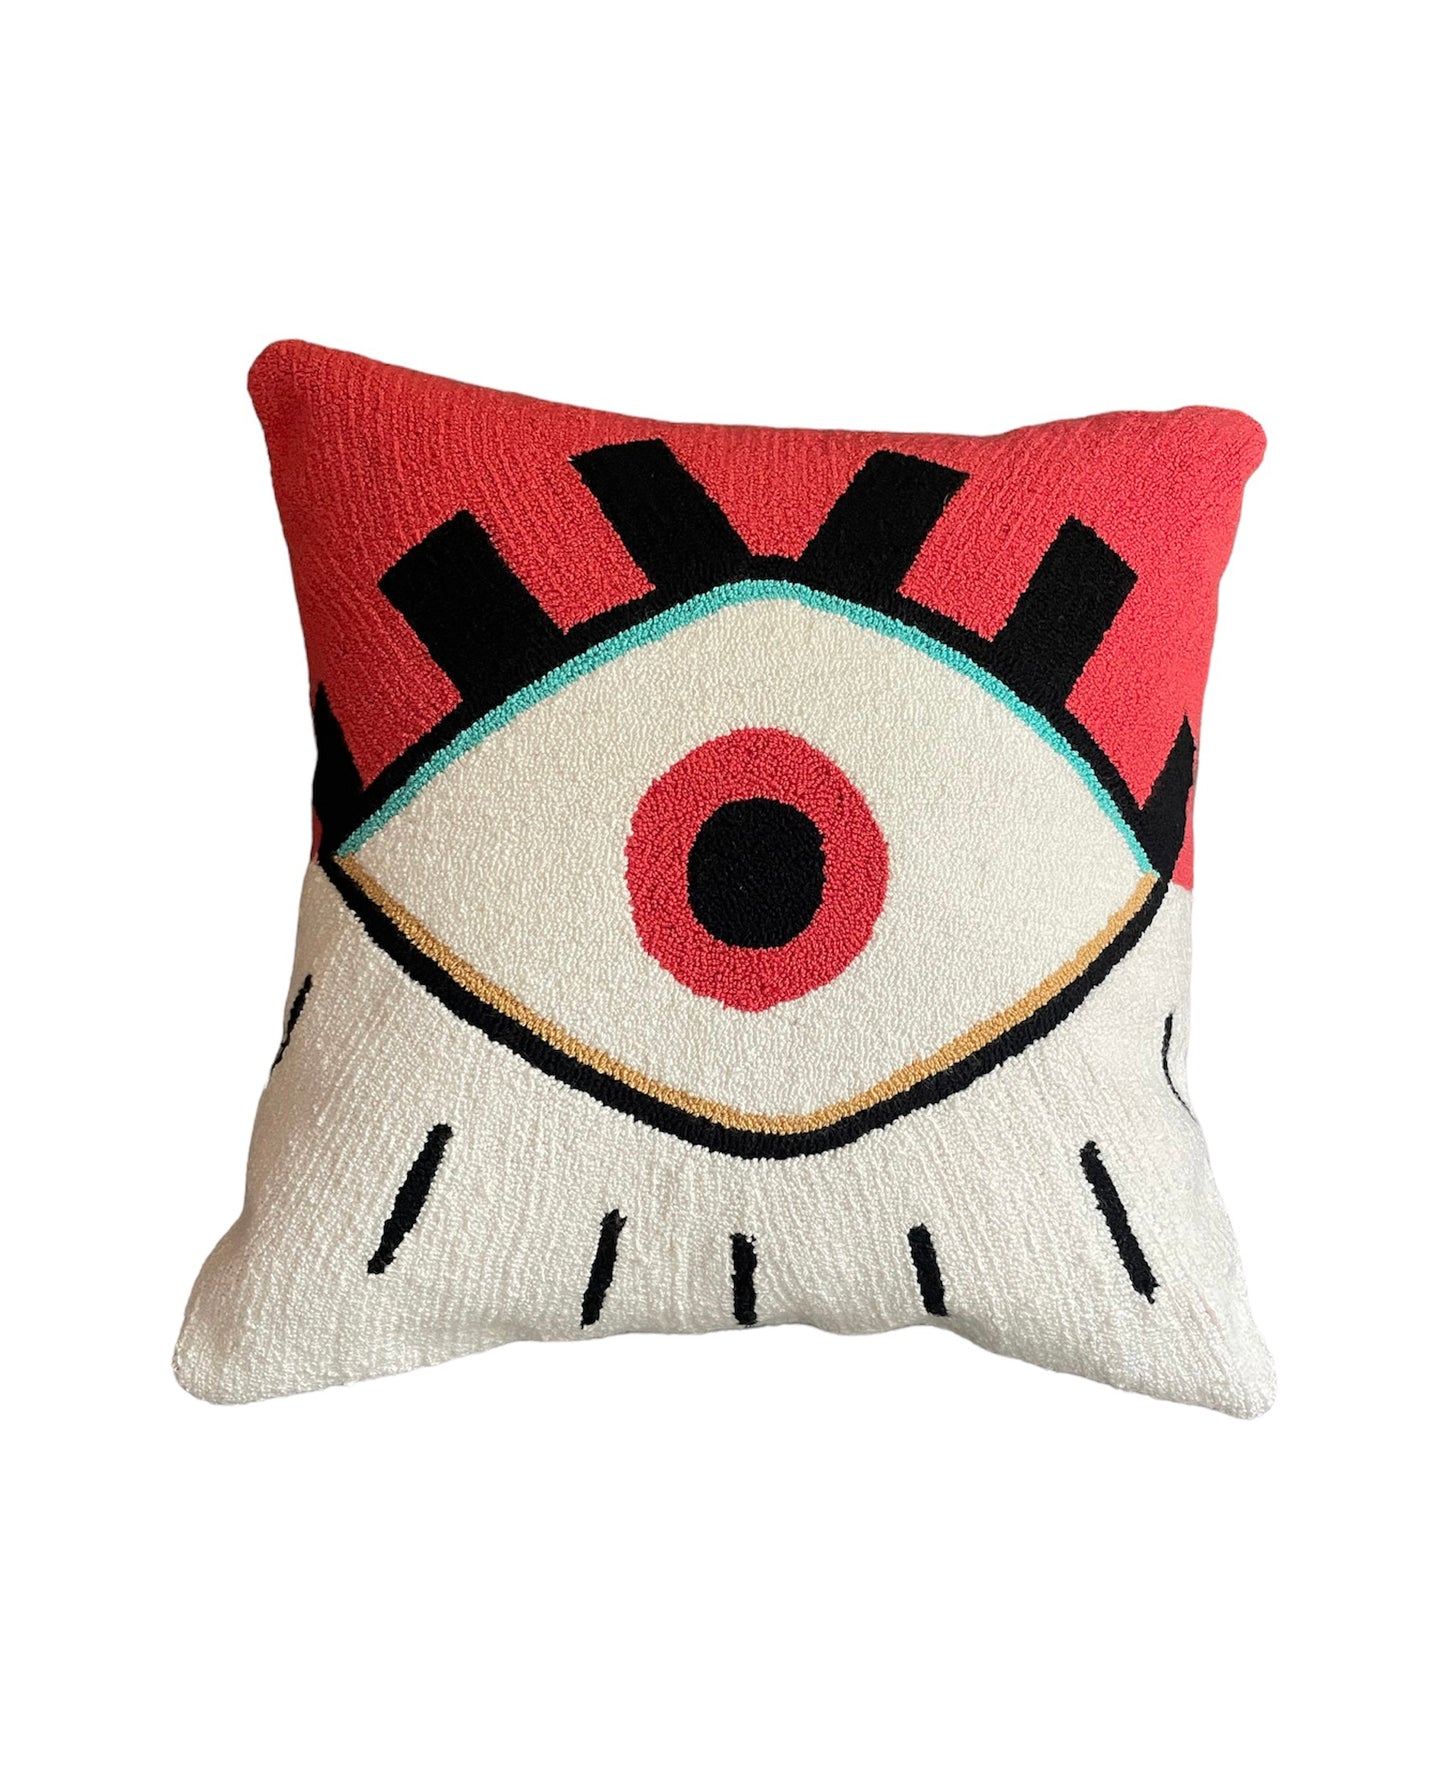 Wayuu Punch Needle Pillowcase, eye pillow